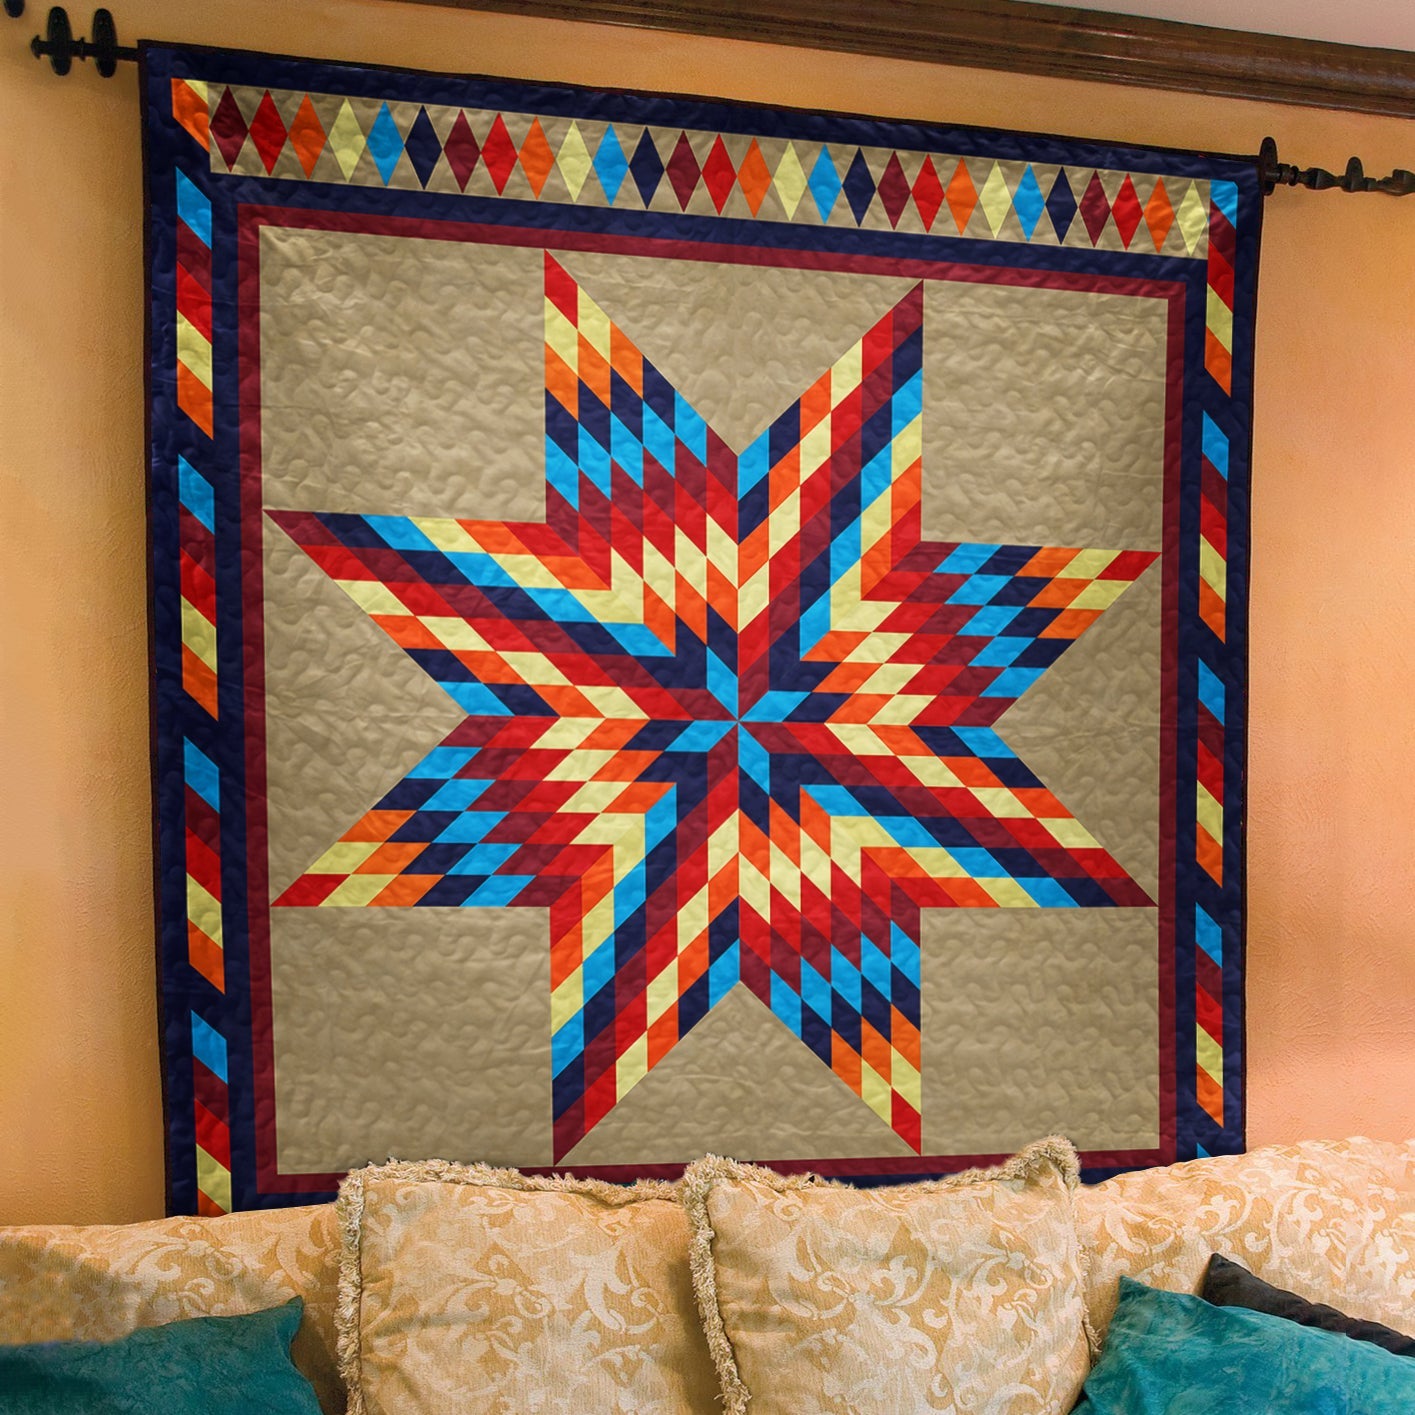 Native American Inspired Star Art Quilt TL05082302BL